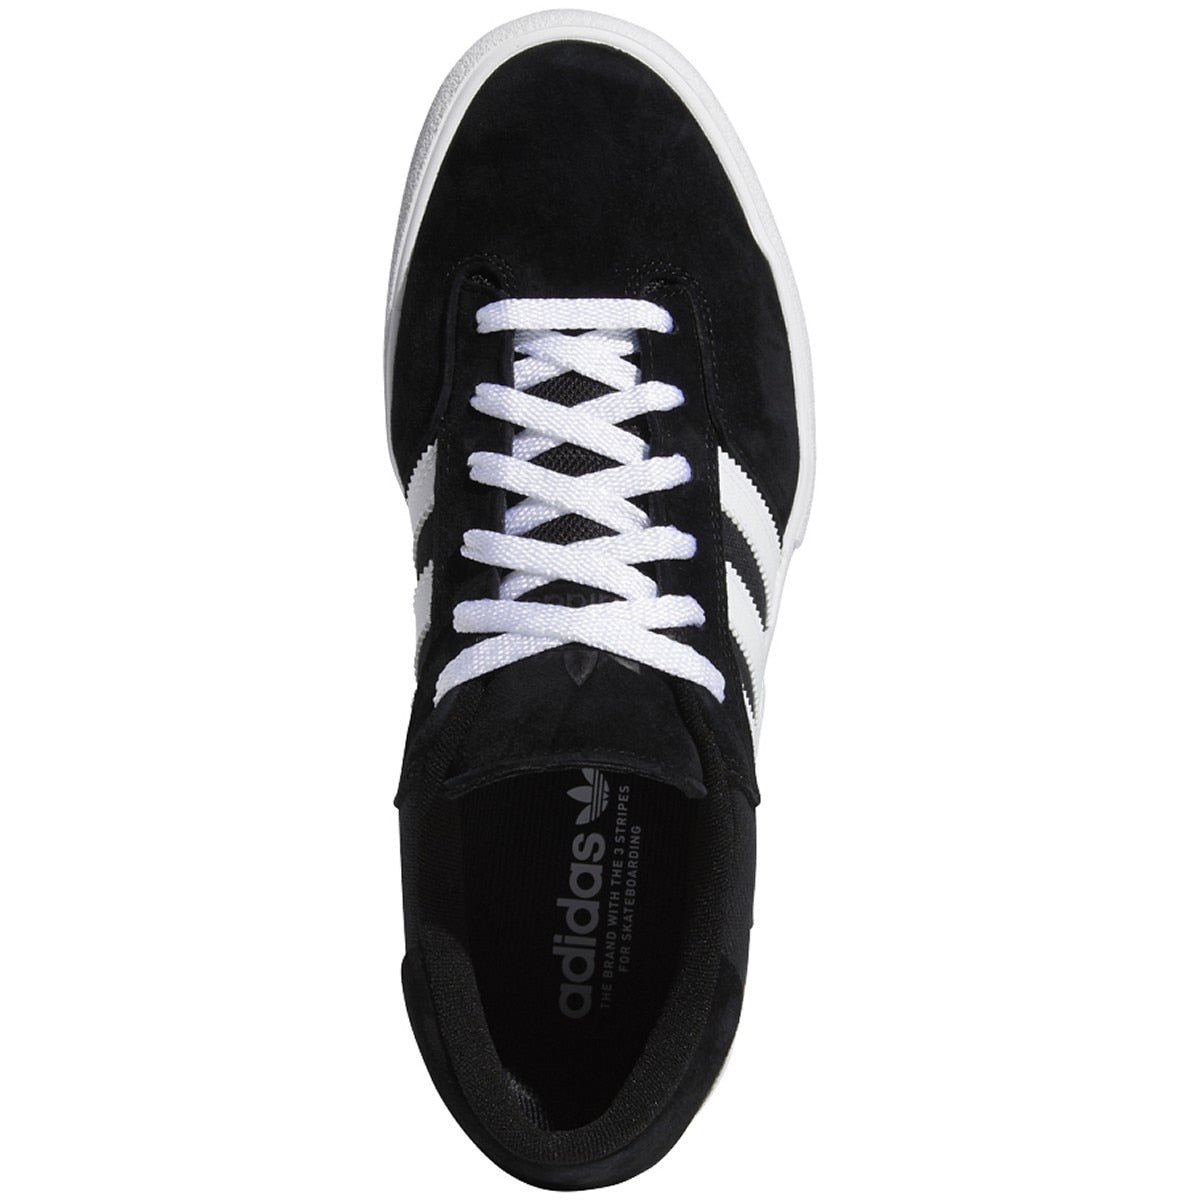 Adidas Matchbreak Super Skate Shoe - Black/White/Gold